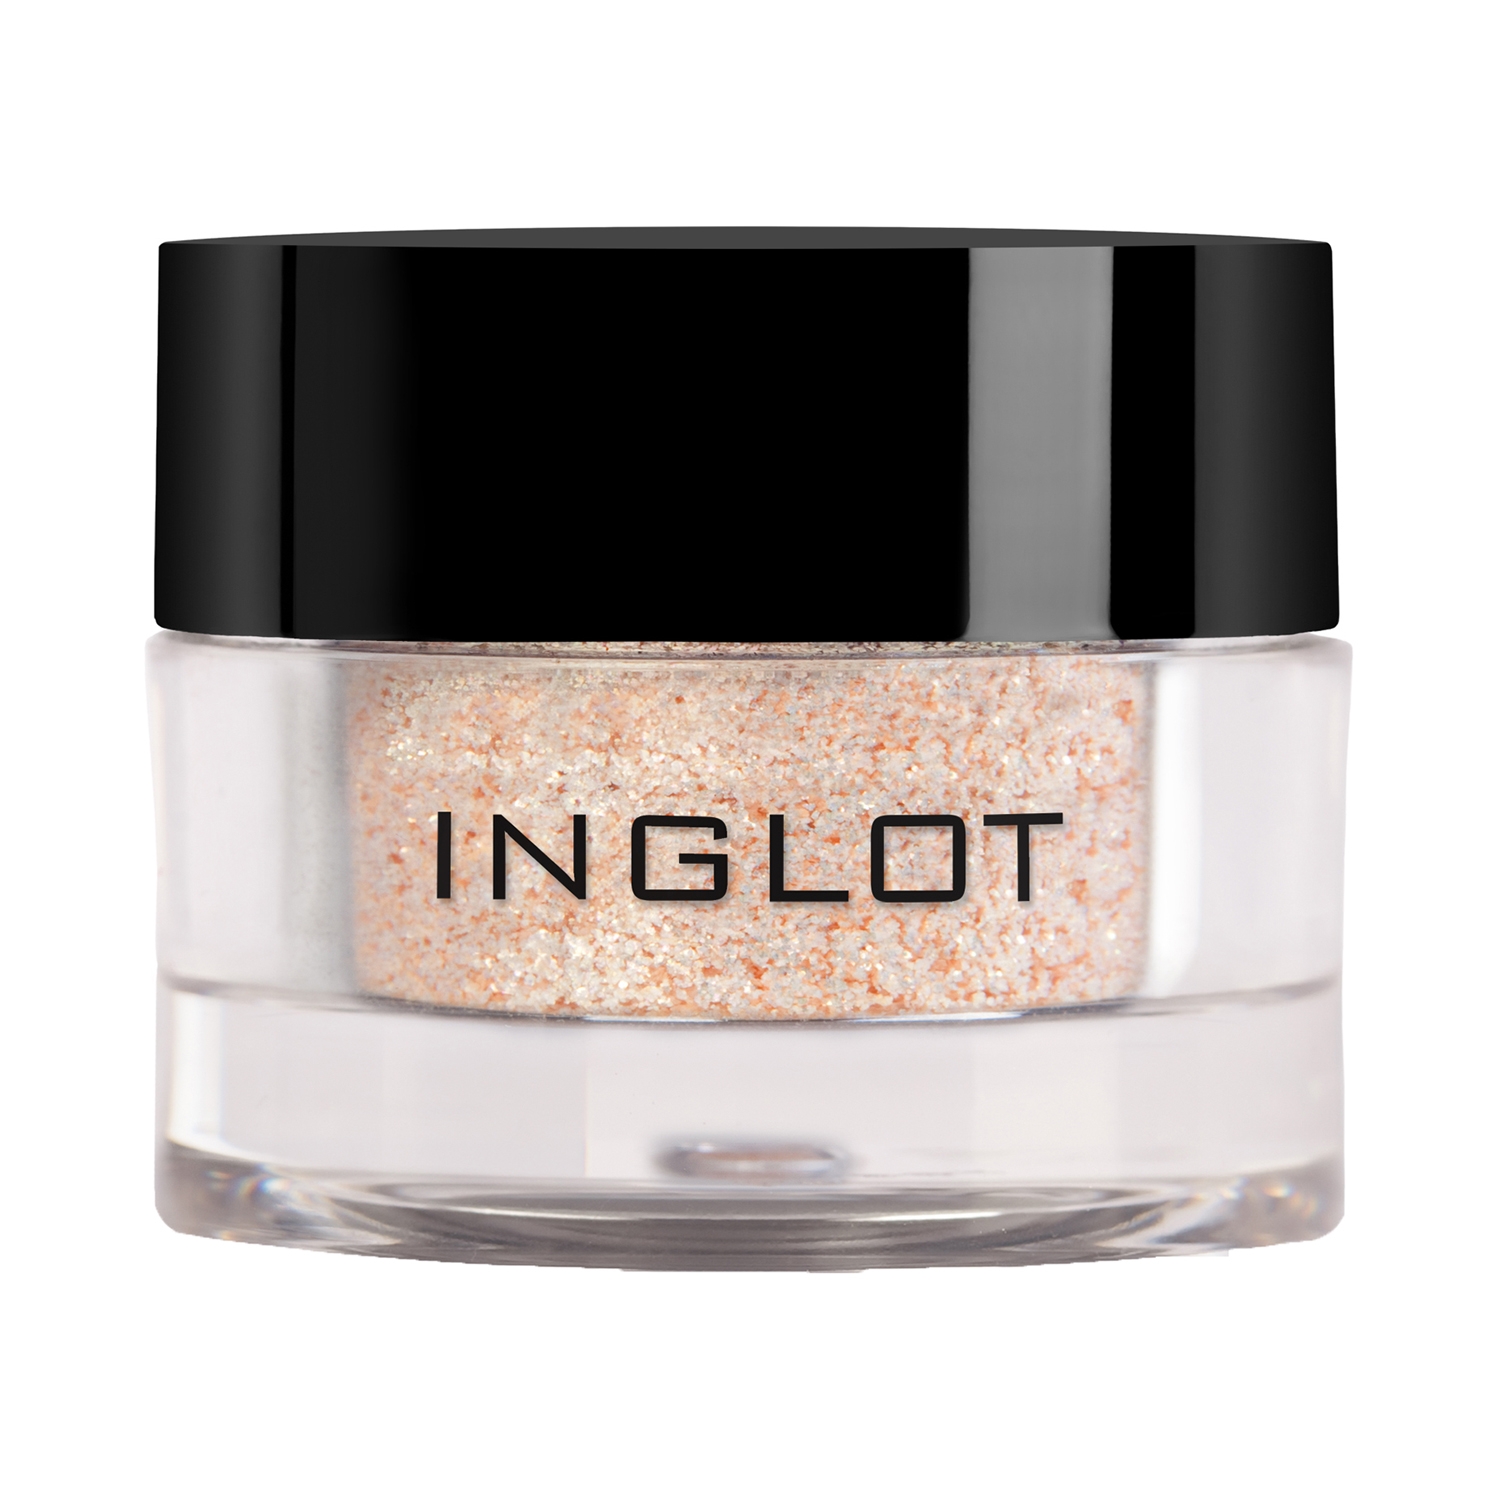 INGLOT | INGLOT AMC Pure Pigment Eye Shadow - 118 (2g)